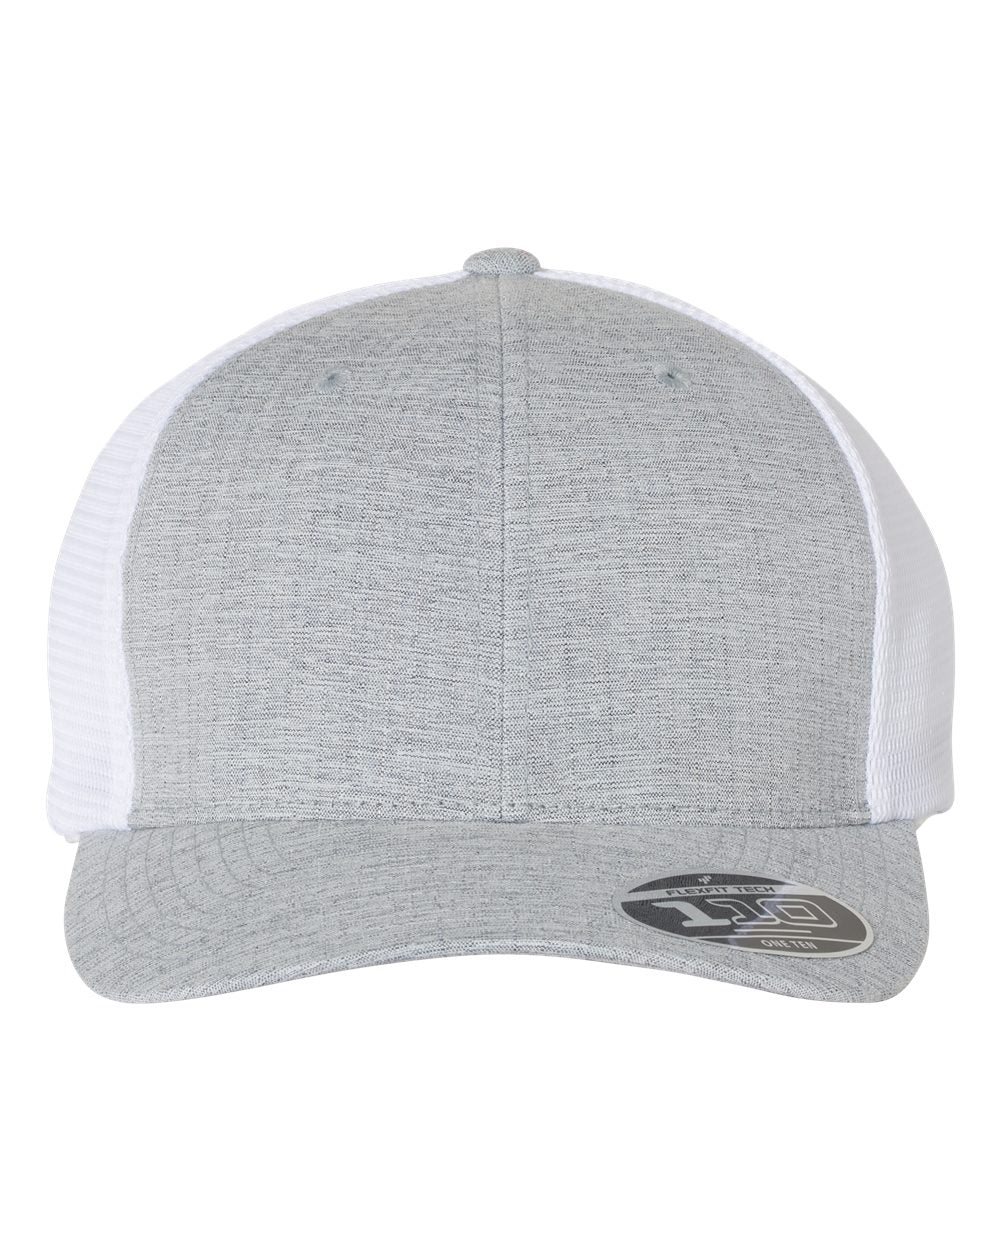 Great Lakes Patch Hat, Custom Flexfit 110 Leather Patch Hat, Leather Patch Trucker Hat, Fishing Hat, Fish Patch Hat, Bass Hat